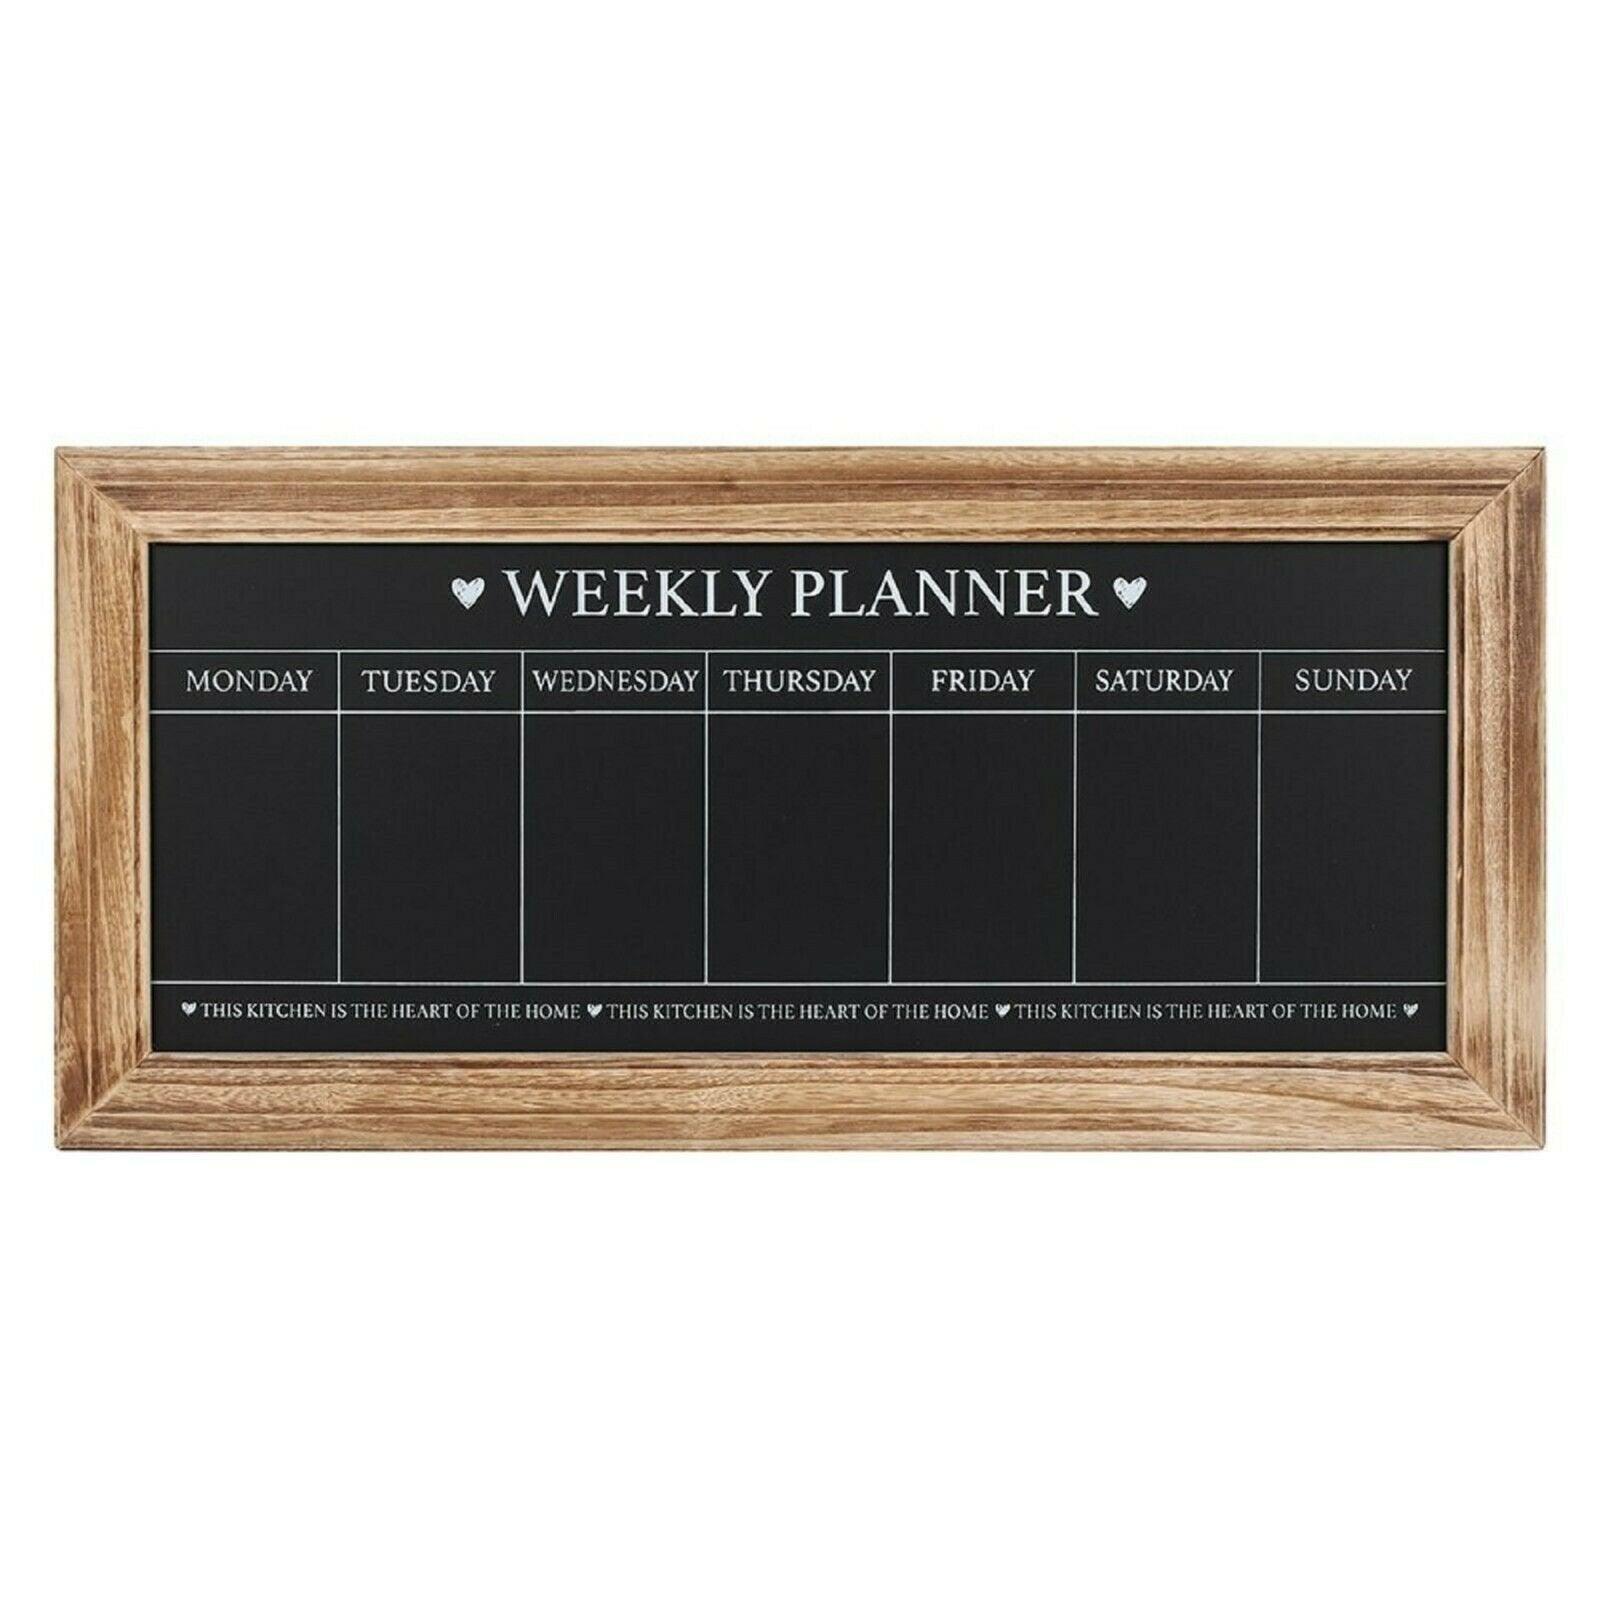 View Chalkboard Weekly Planner information